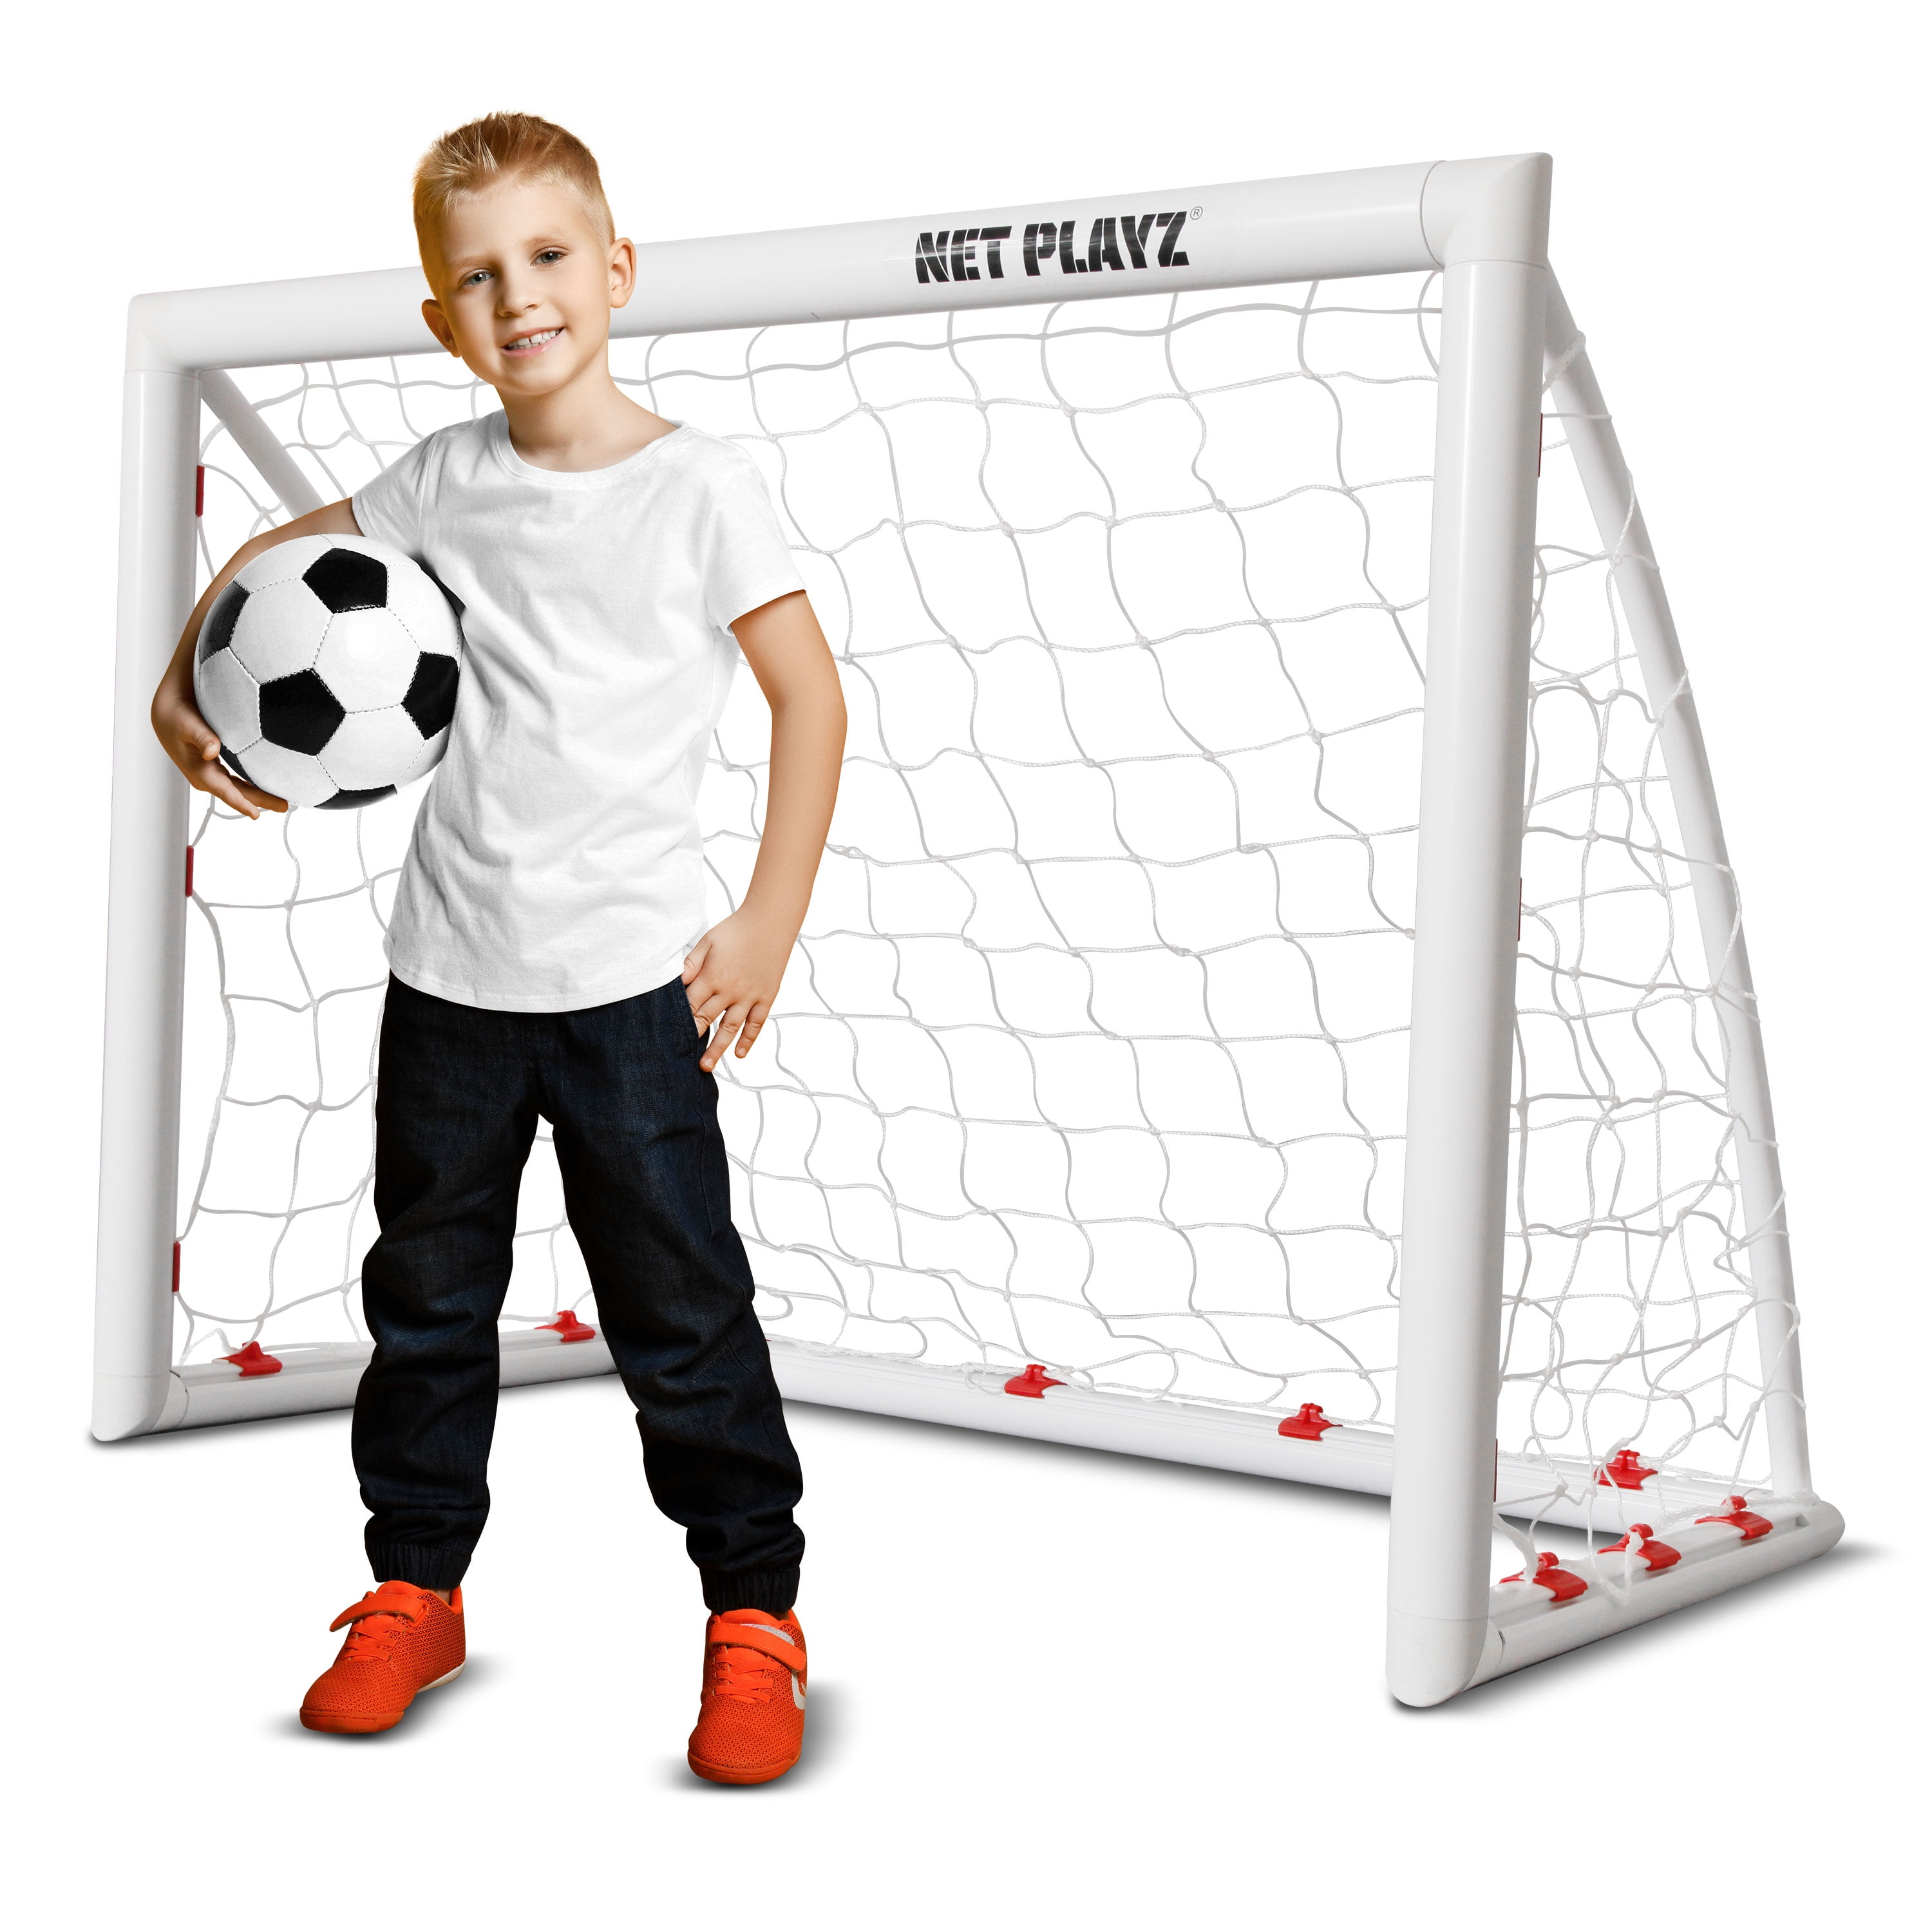 Net Playz 4' x 3' x 2' Backyard PVC Soccer Goal